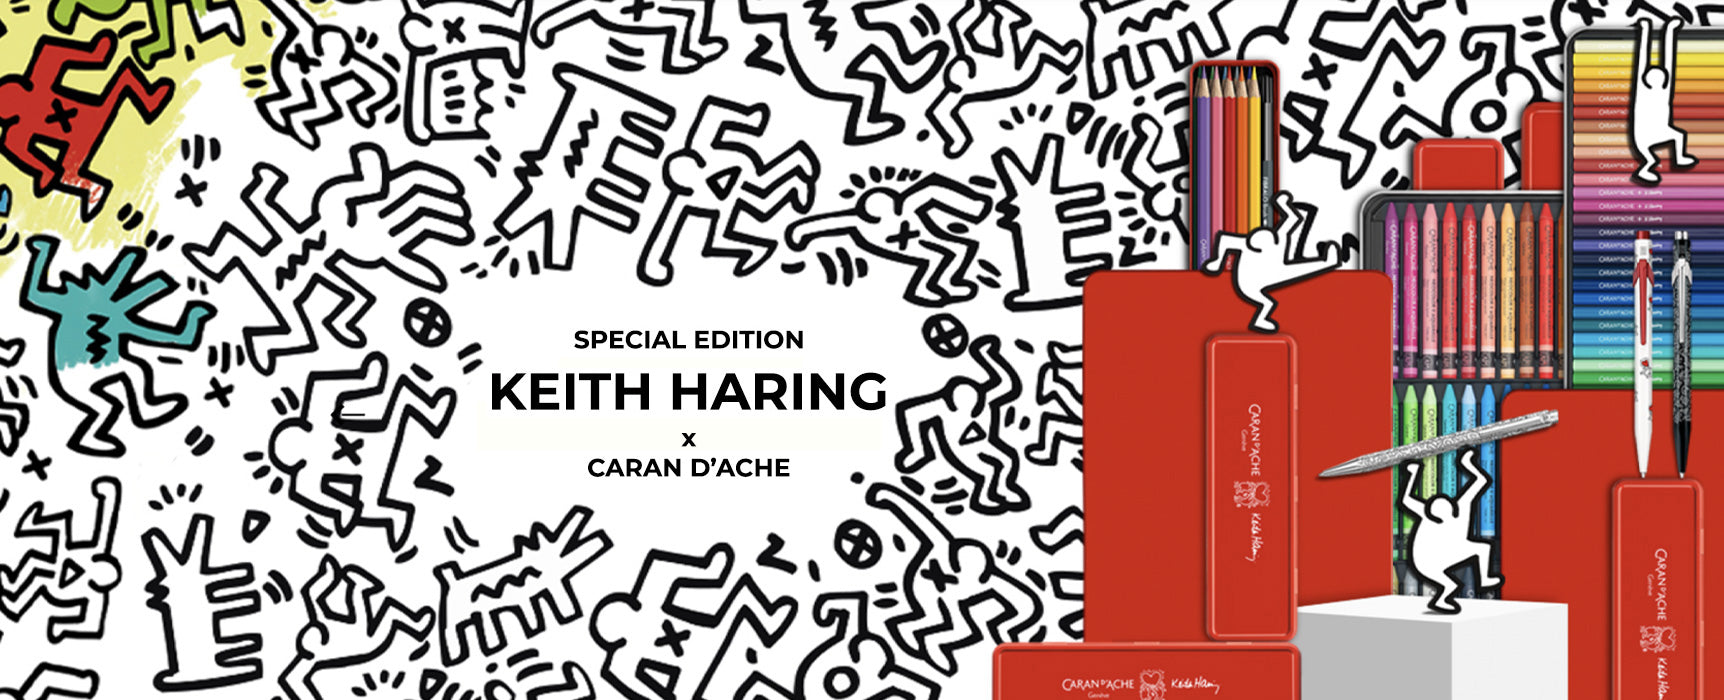 Keith Haring x Caran D'Ache